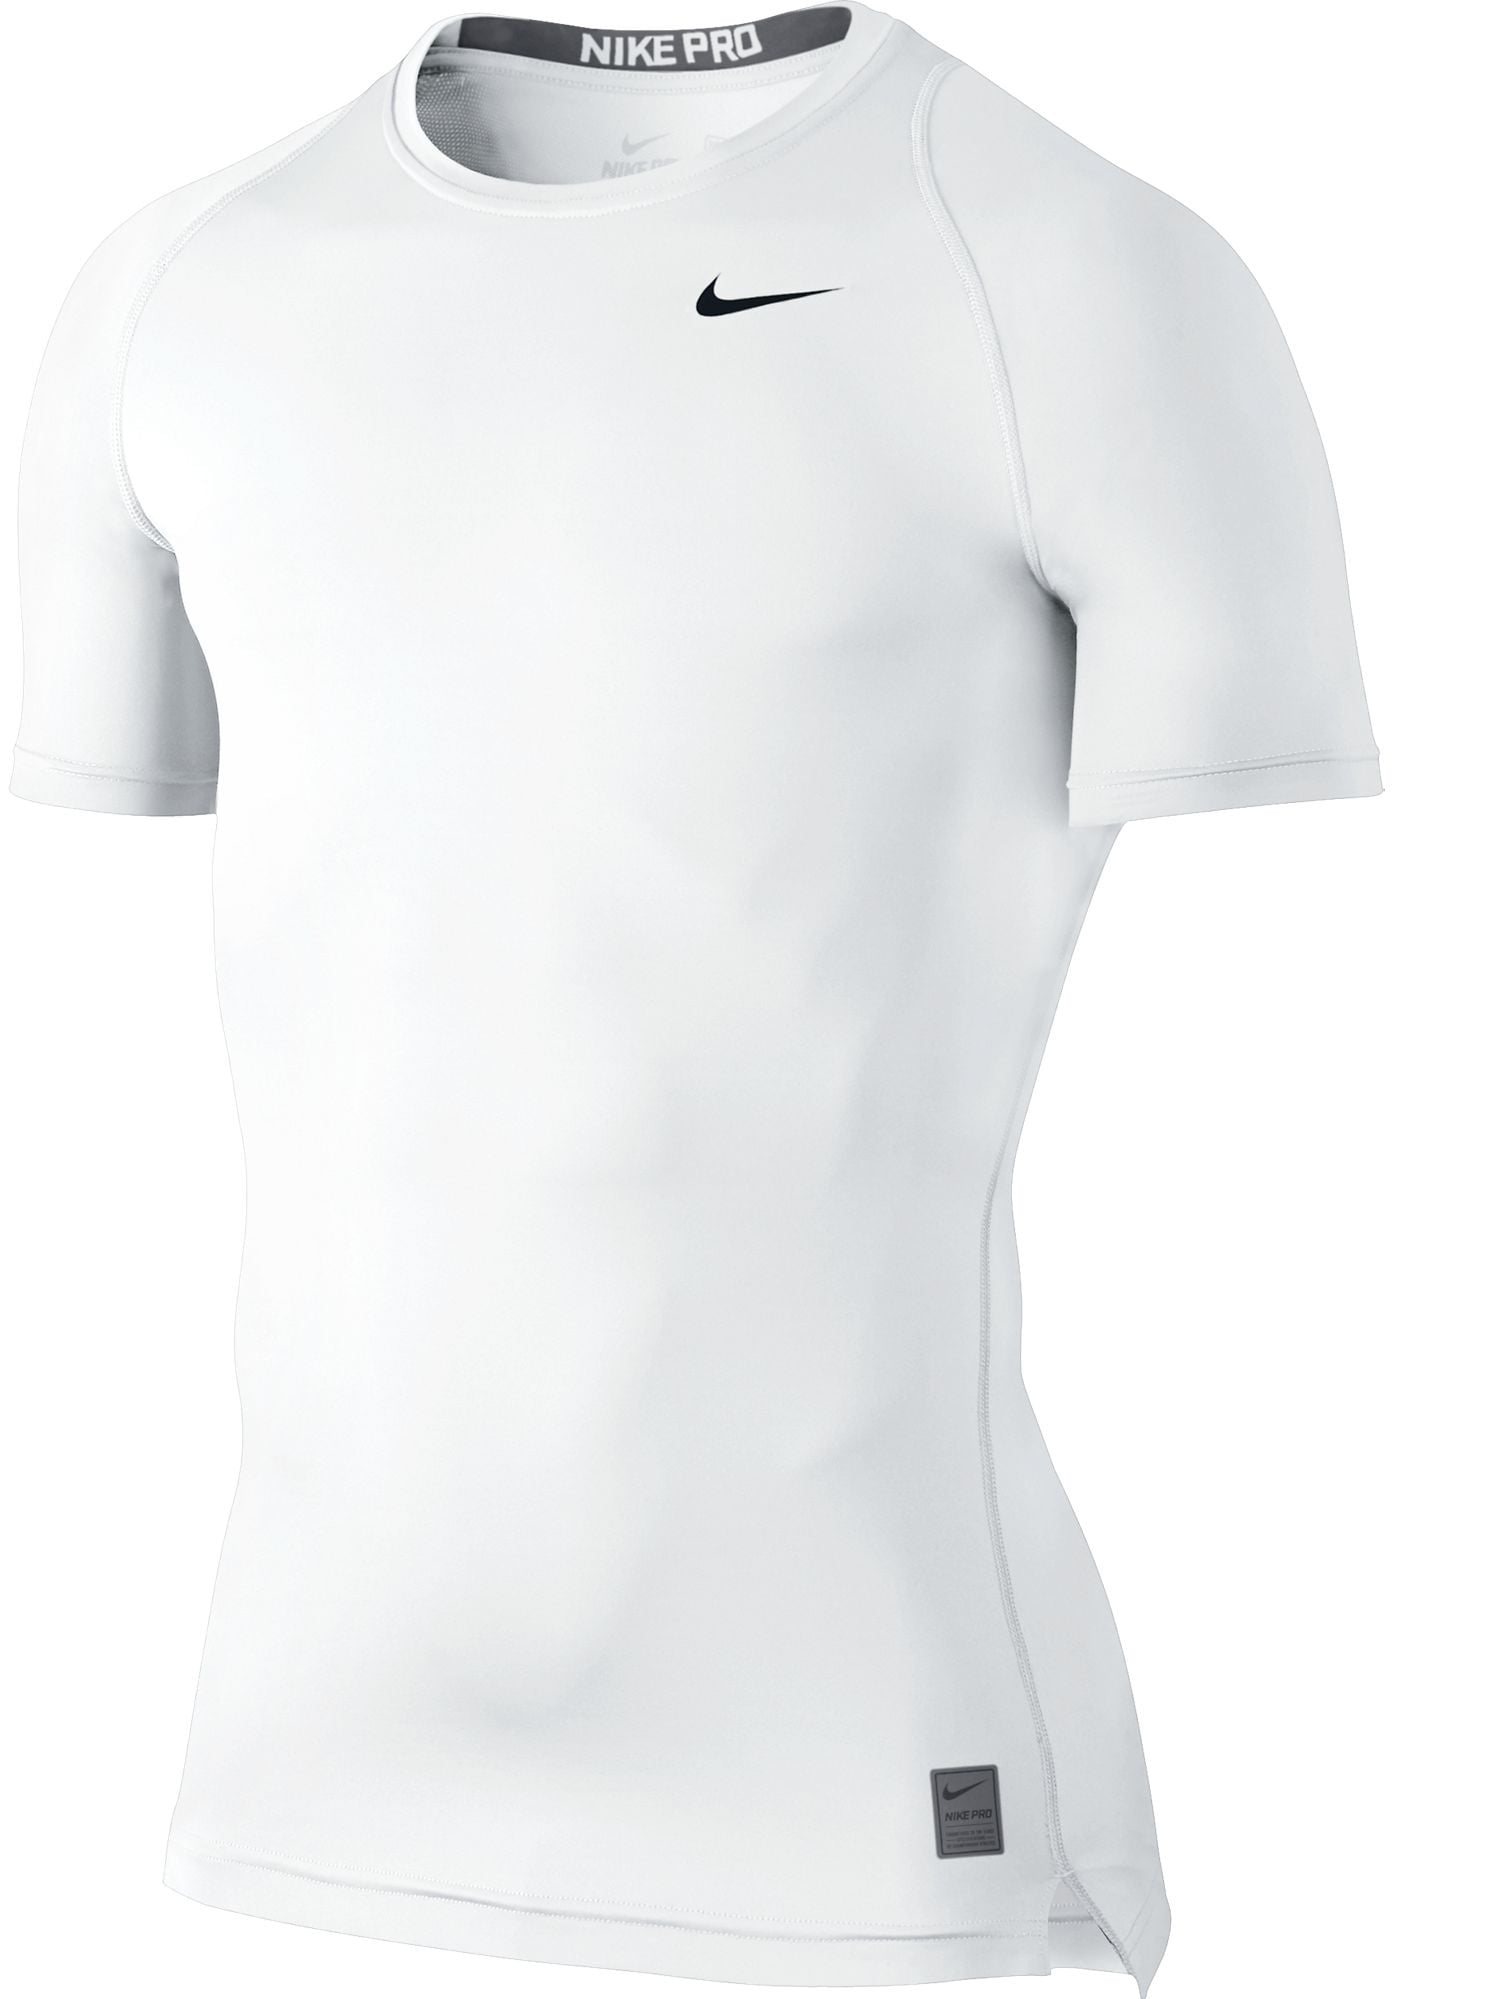 Uenighed Maryanne Jones Narabar Nike pro cool compression short sleeve top White/Black 703094-100 -  Walmart.com